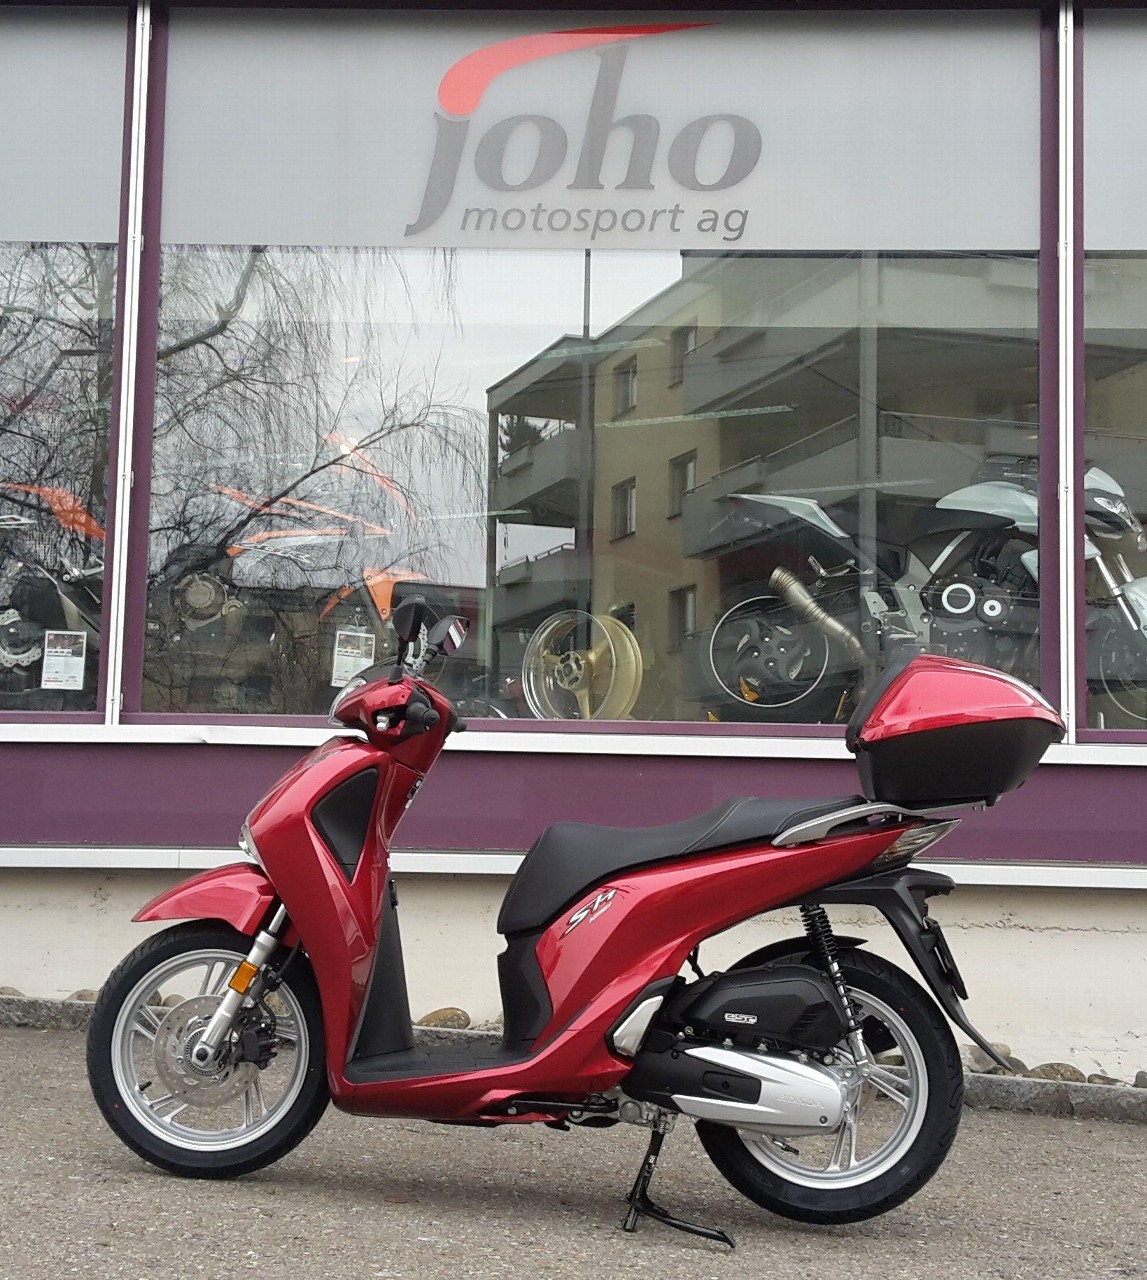 Moto neuve acheter HONDA SH 125 AD ABS 2018 Joho Motosport AG Bremgarten